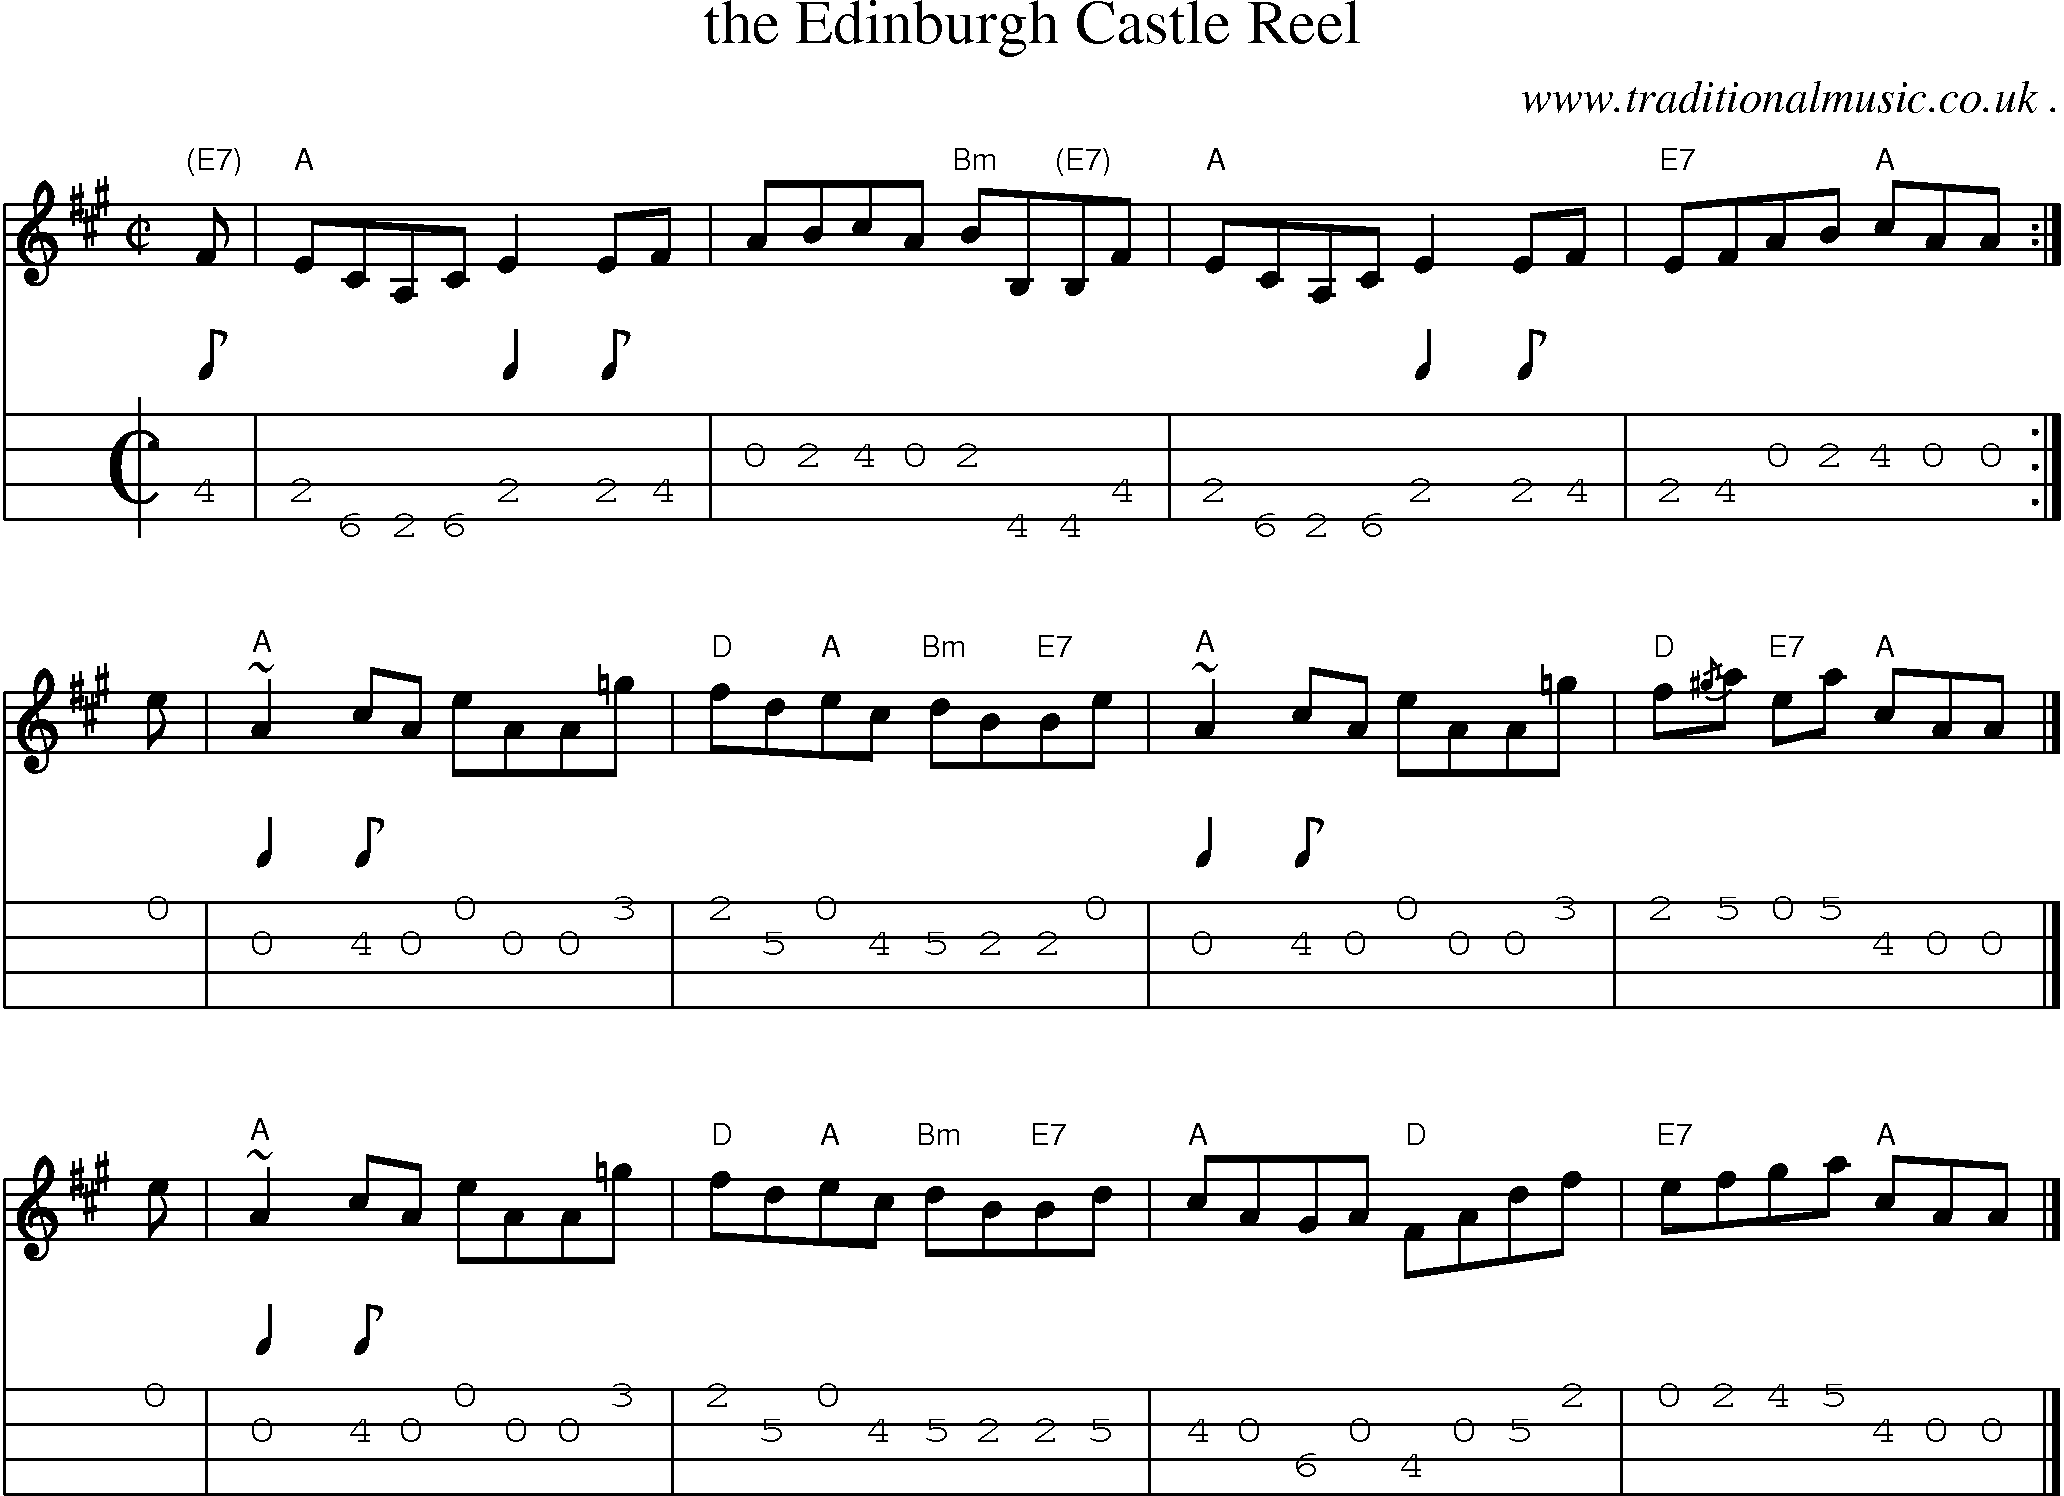 Sheet-music  score, Chords and Mandolin Tabs for The Edinburgh Castle Reel